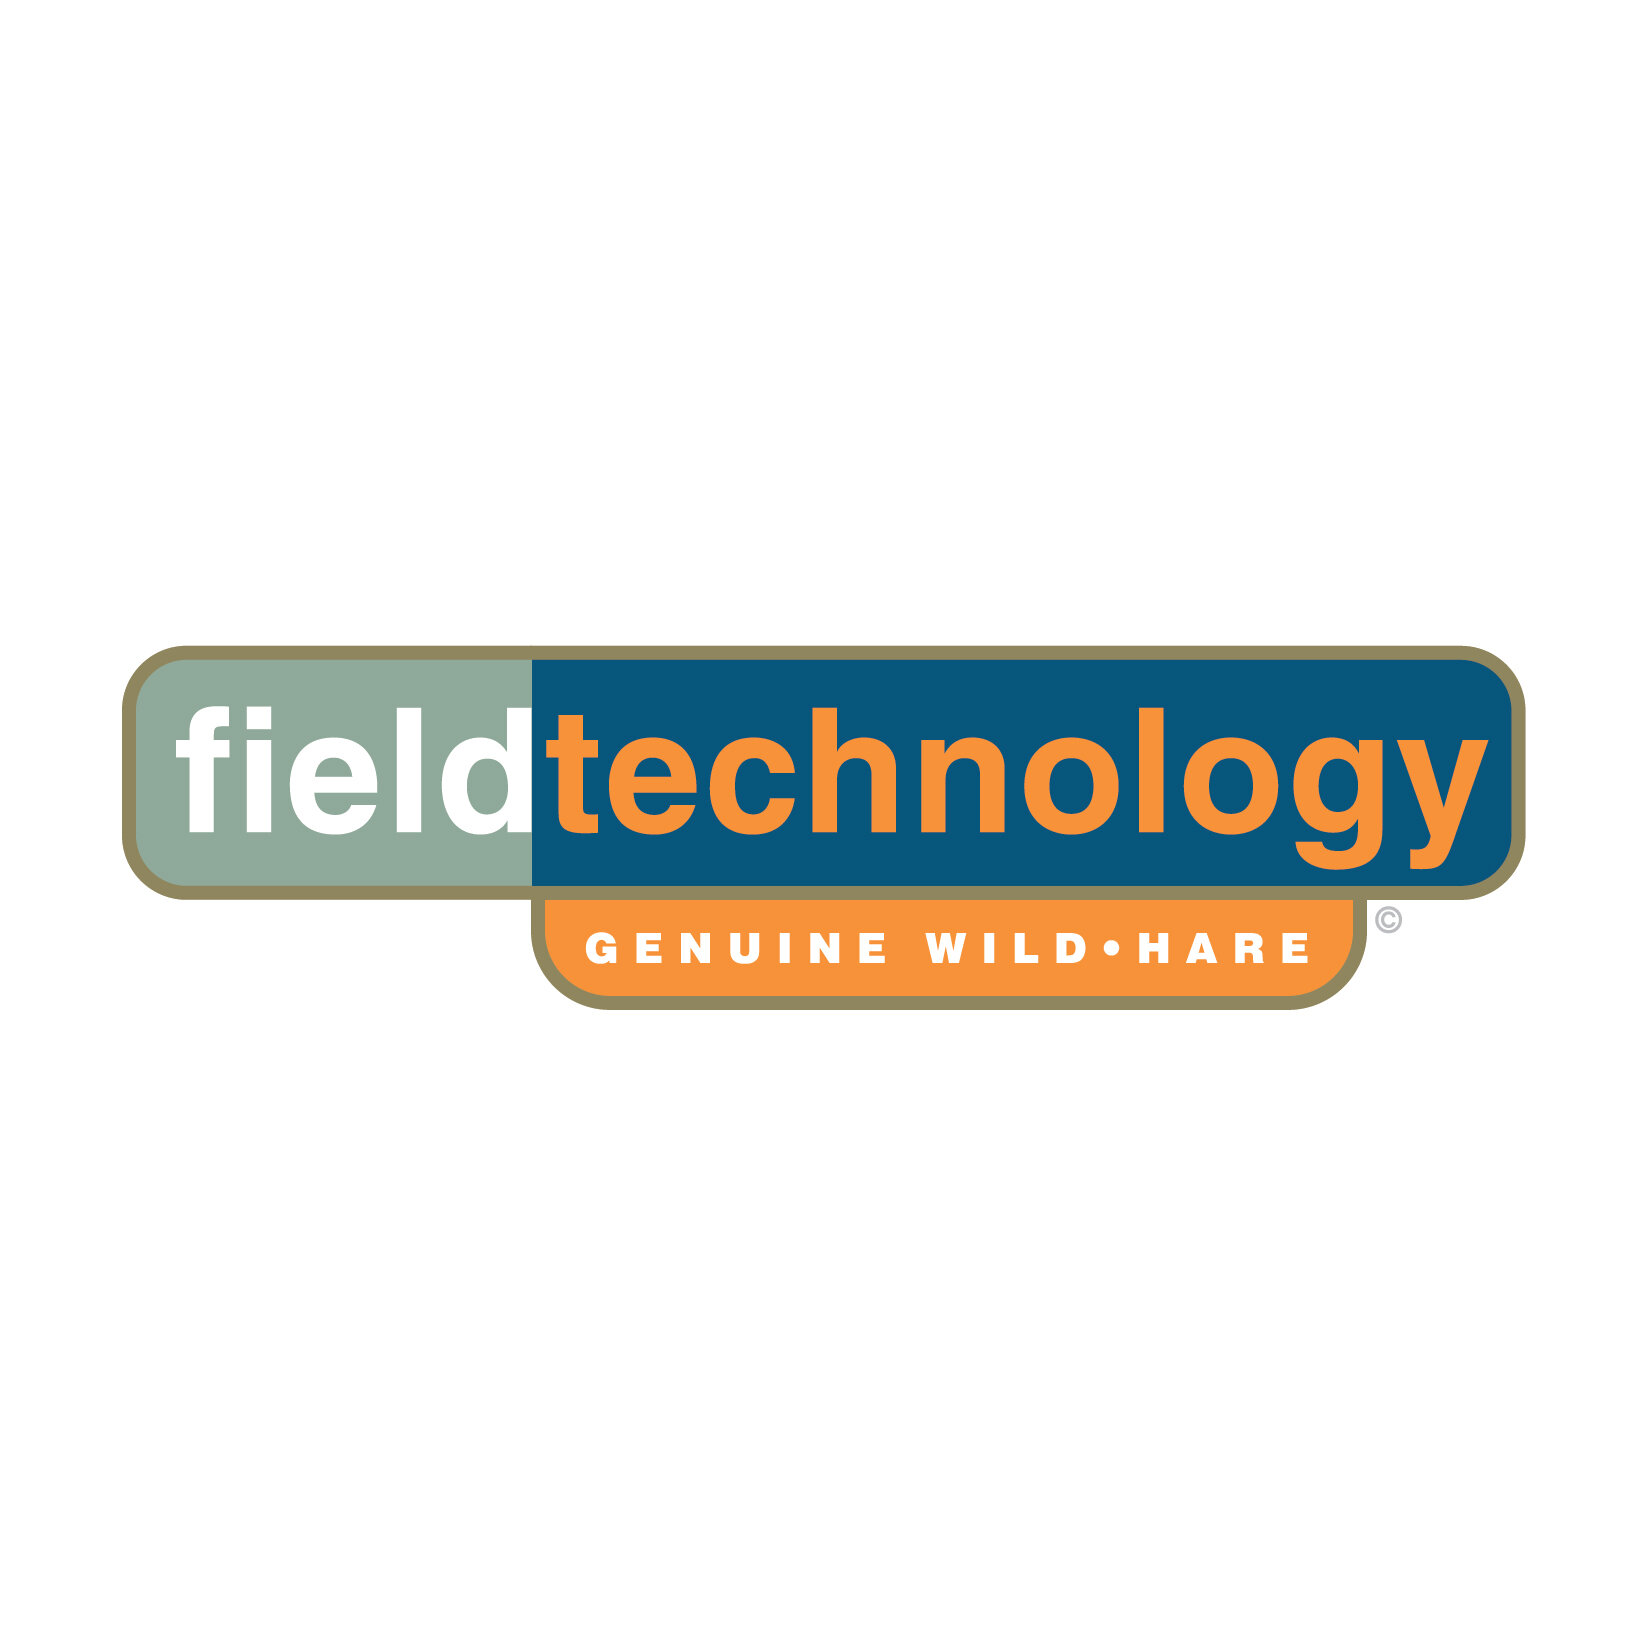  Wild•Hare International Field Technology logo  Design, branding and creative direction by Chuck Mitchell 